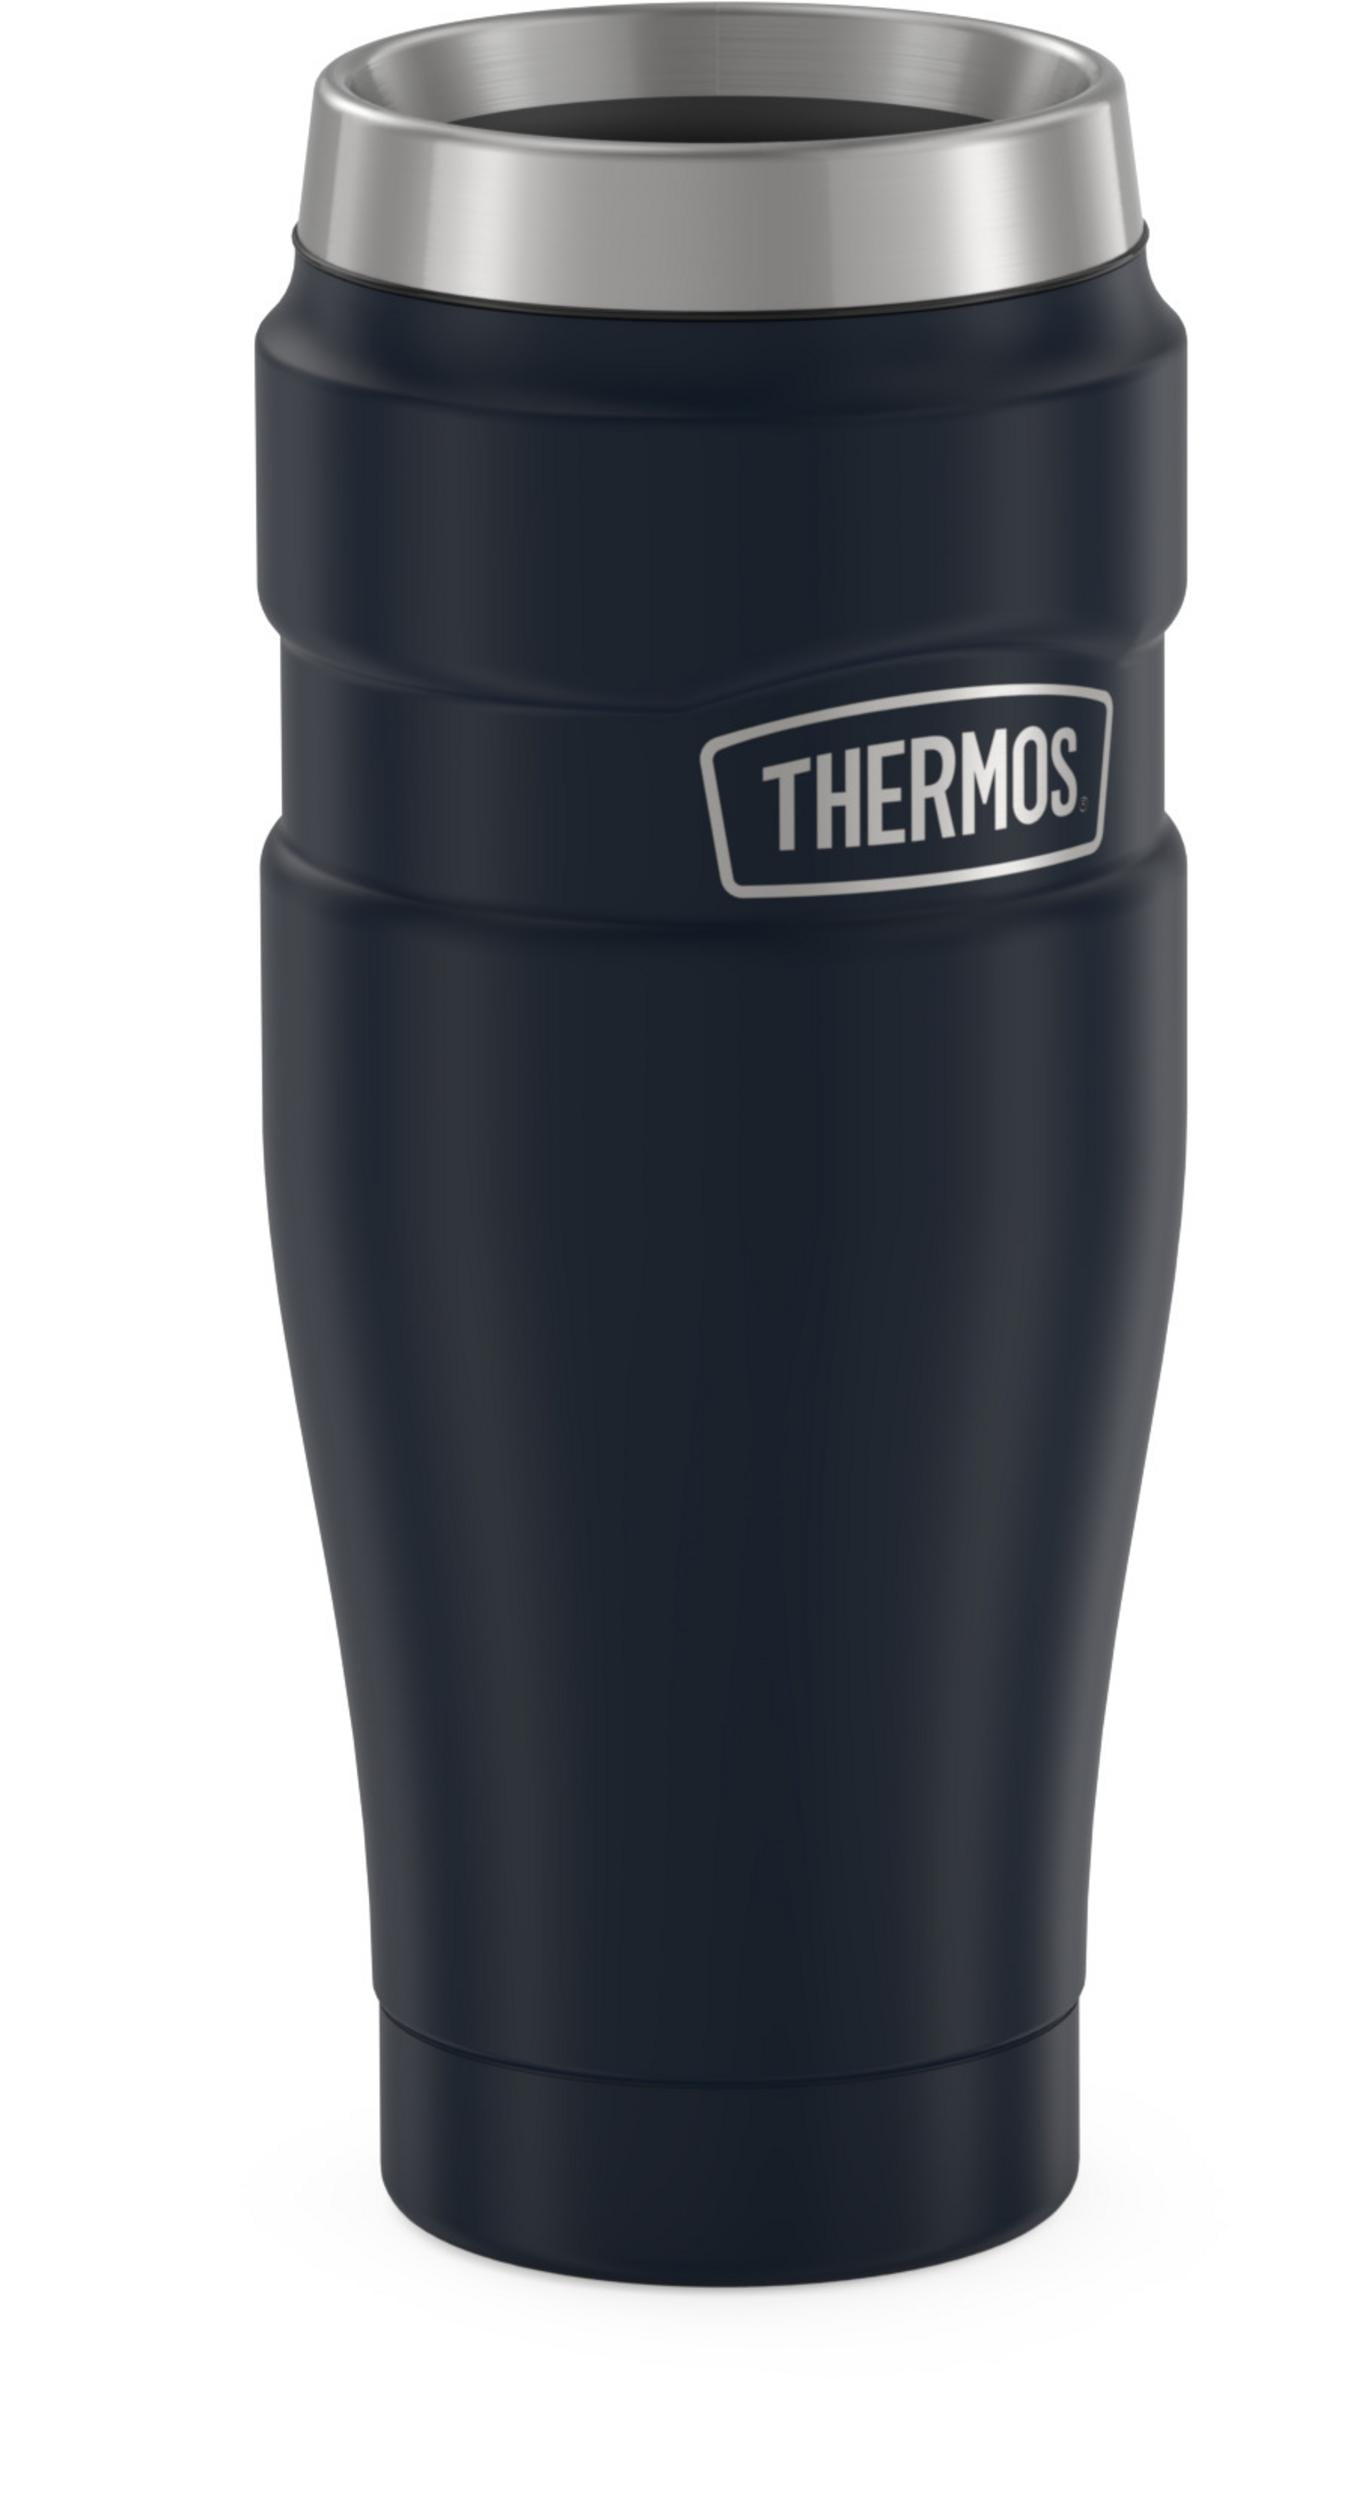 Thin Red Line Travel Coffee Mug Insulated Cup 16oz Black Thermos US Flag TRL